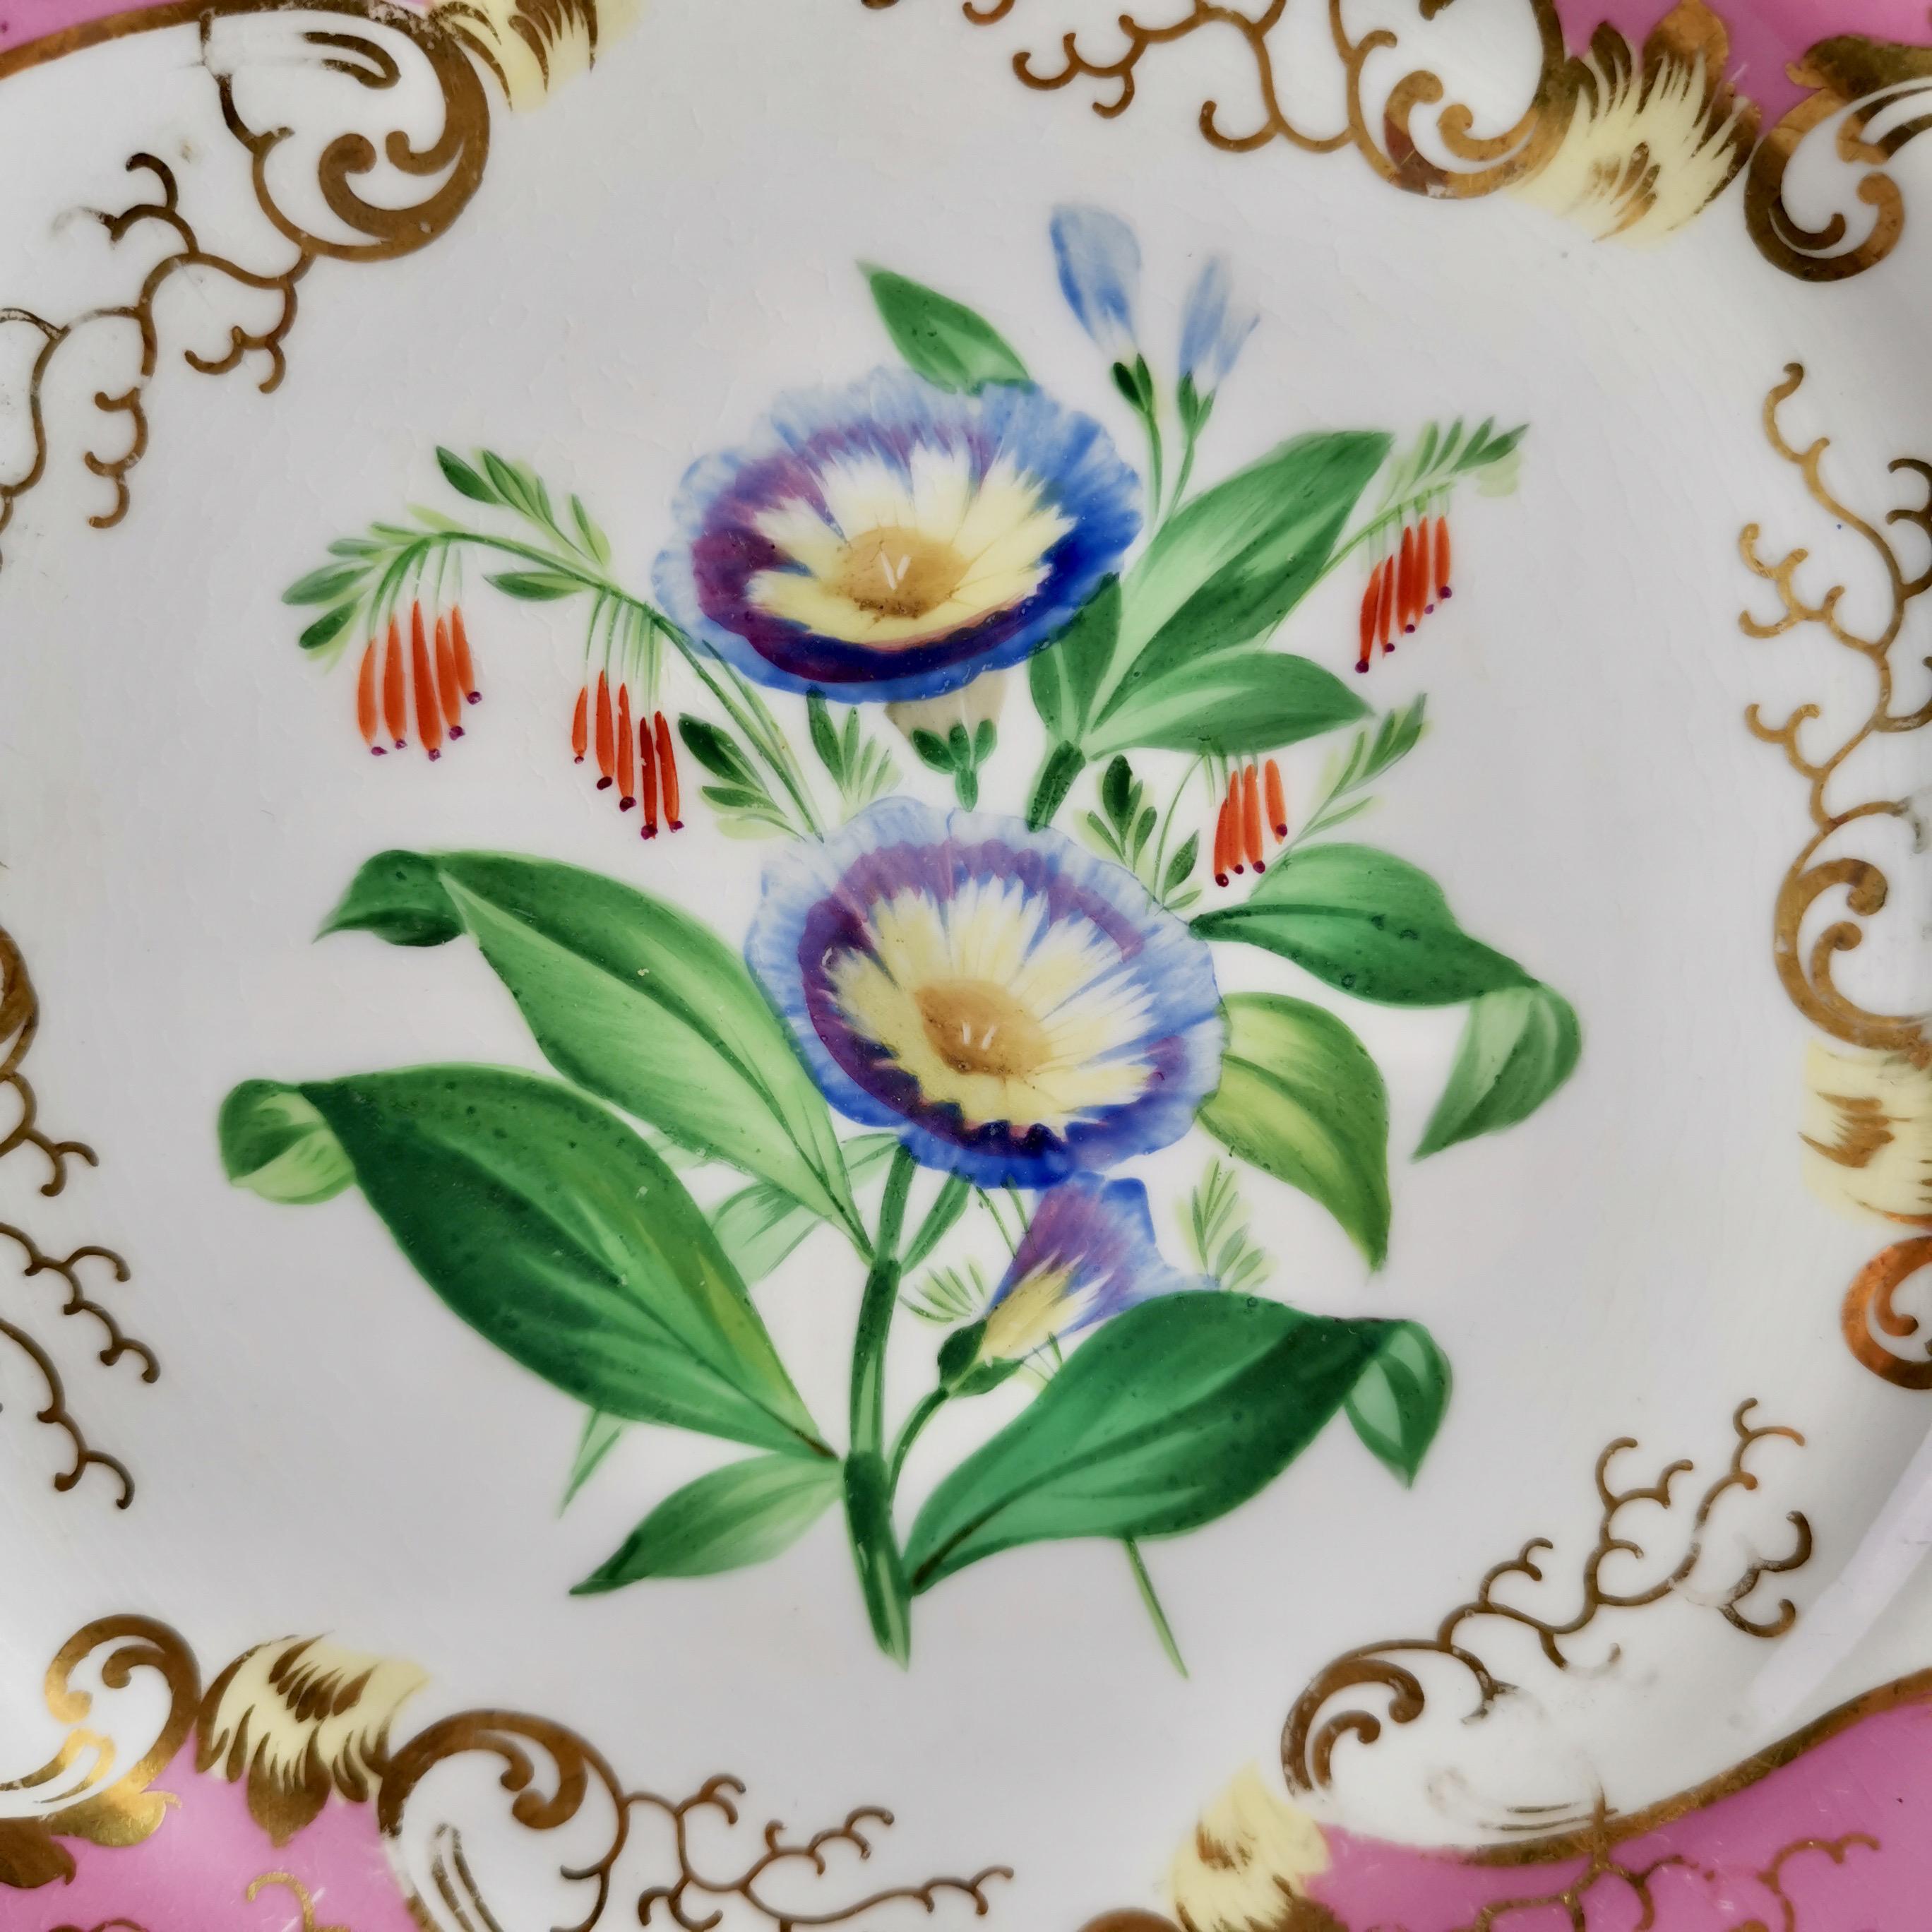 Samuel Alcock Small Porcelain Dessert Set, Pink with Flowers, Victorian 1854 1